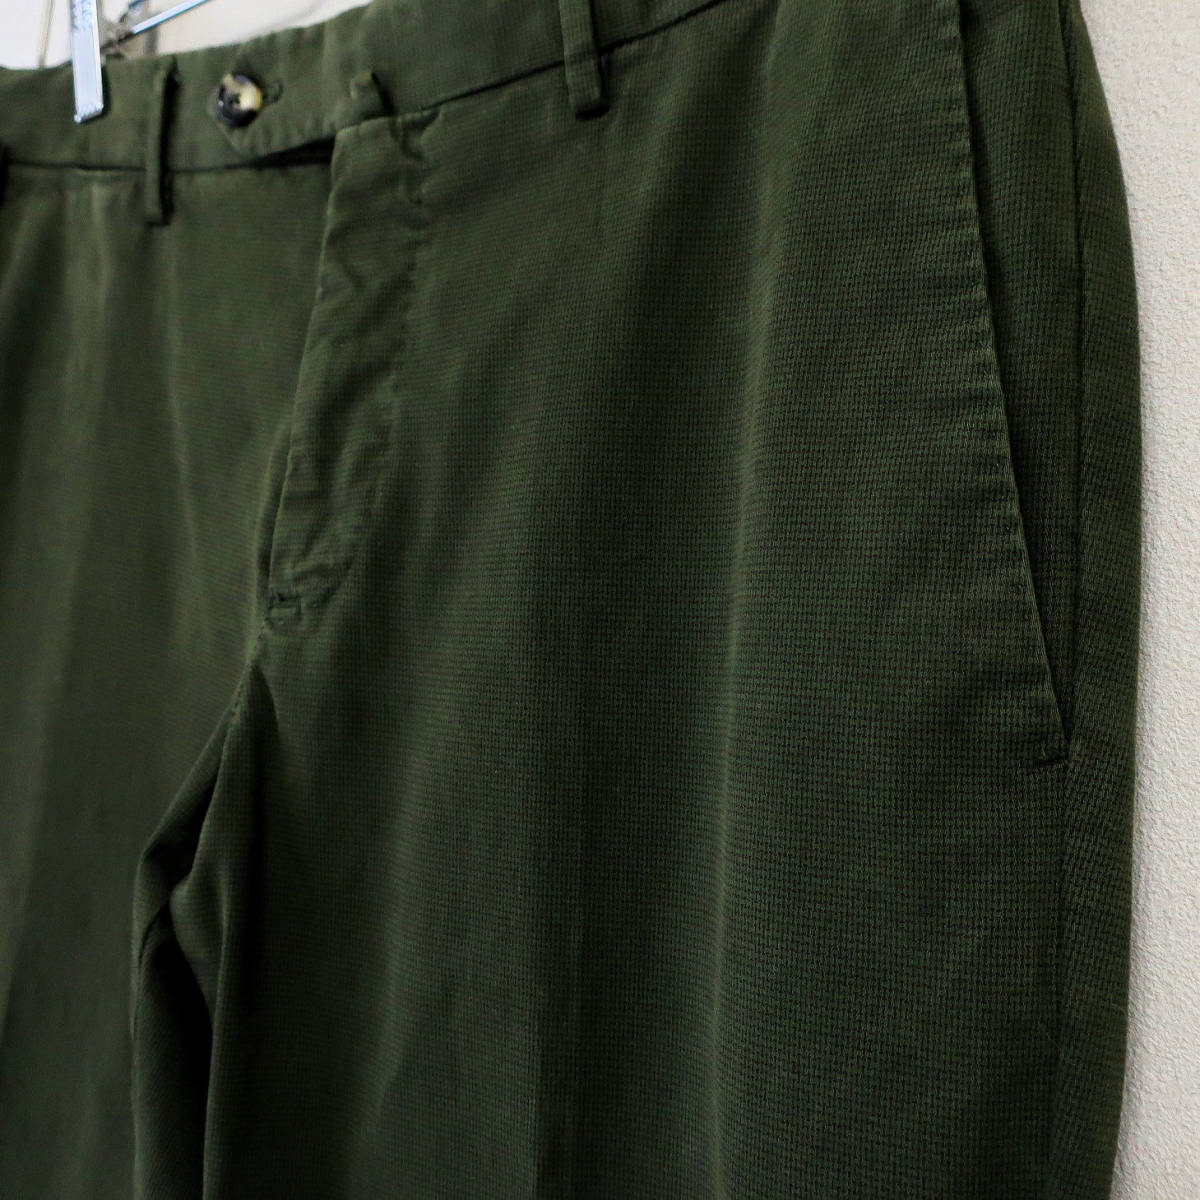  new goods PT TORINO Italian beautiful legs slim thin stretch chinos cotton pants PT01 weave pattern green green men's 54 3XL size unused 